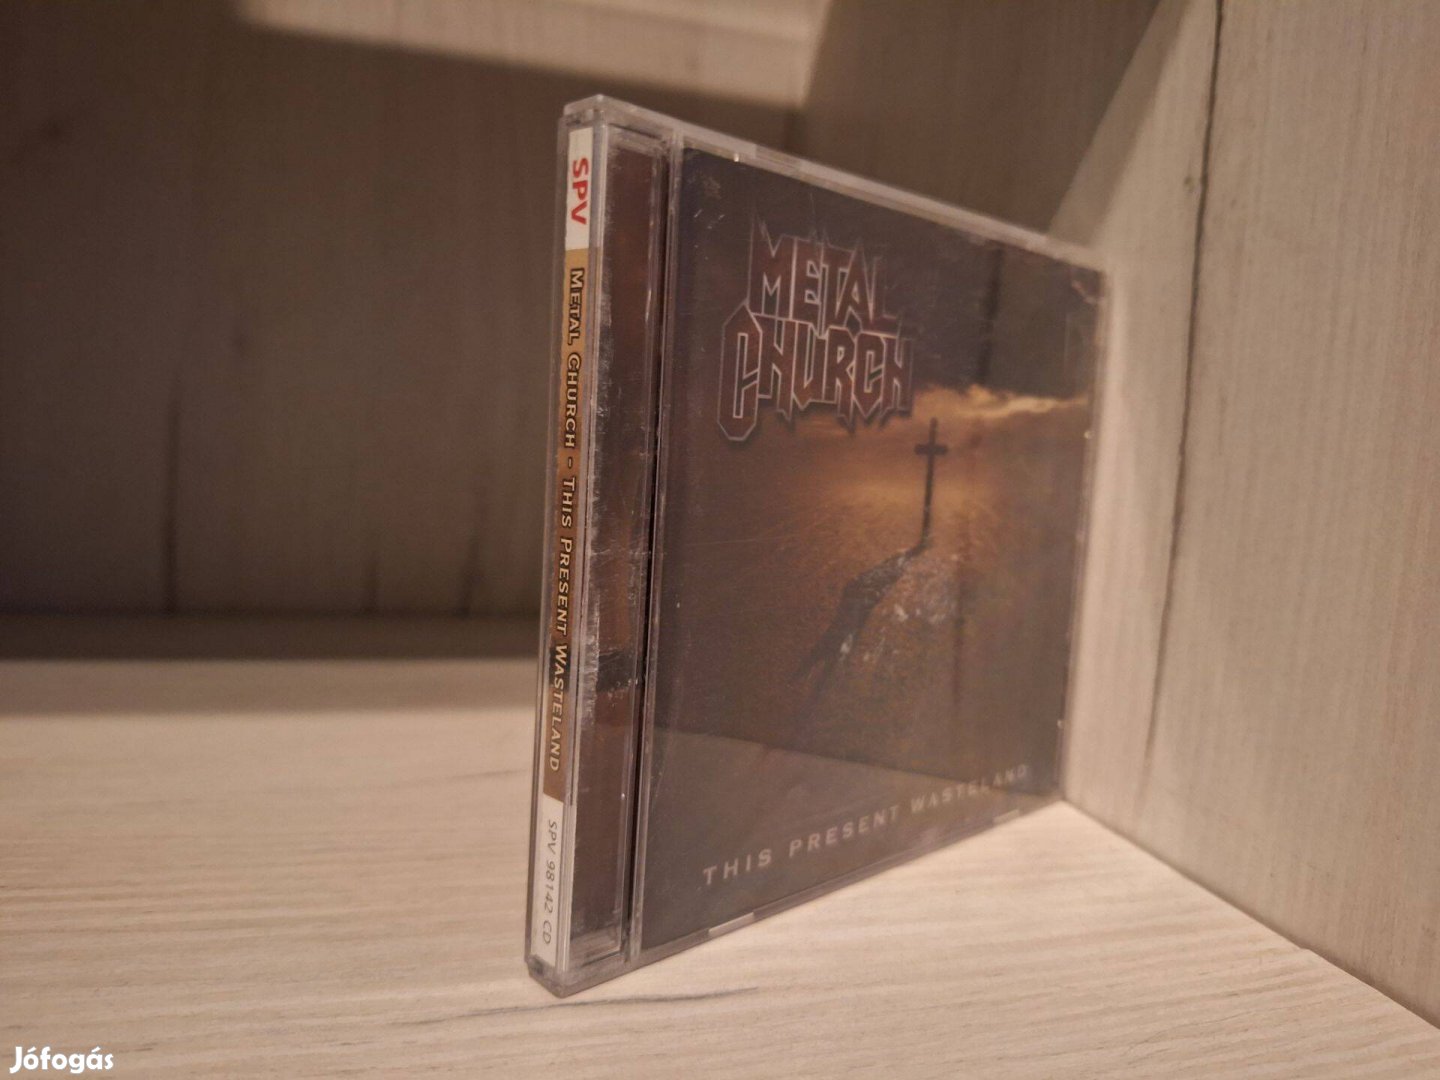 Metal Church - This Present Wasteland CD